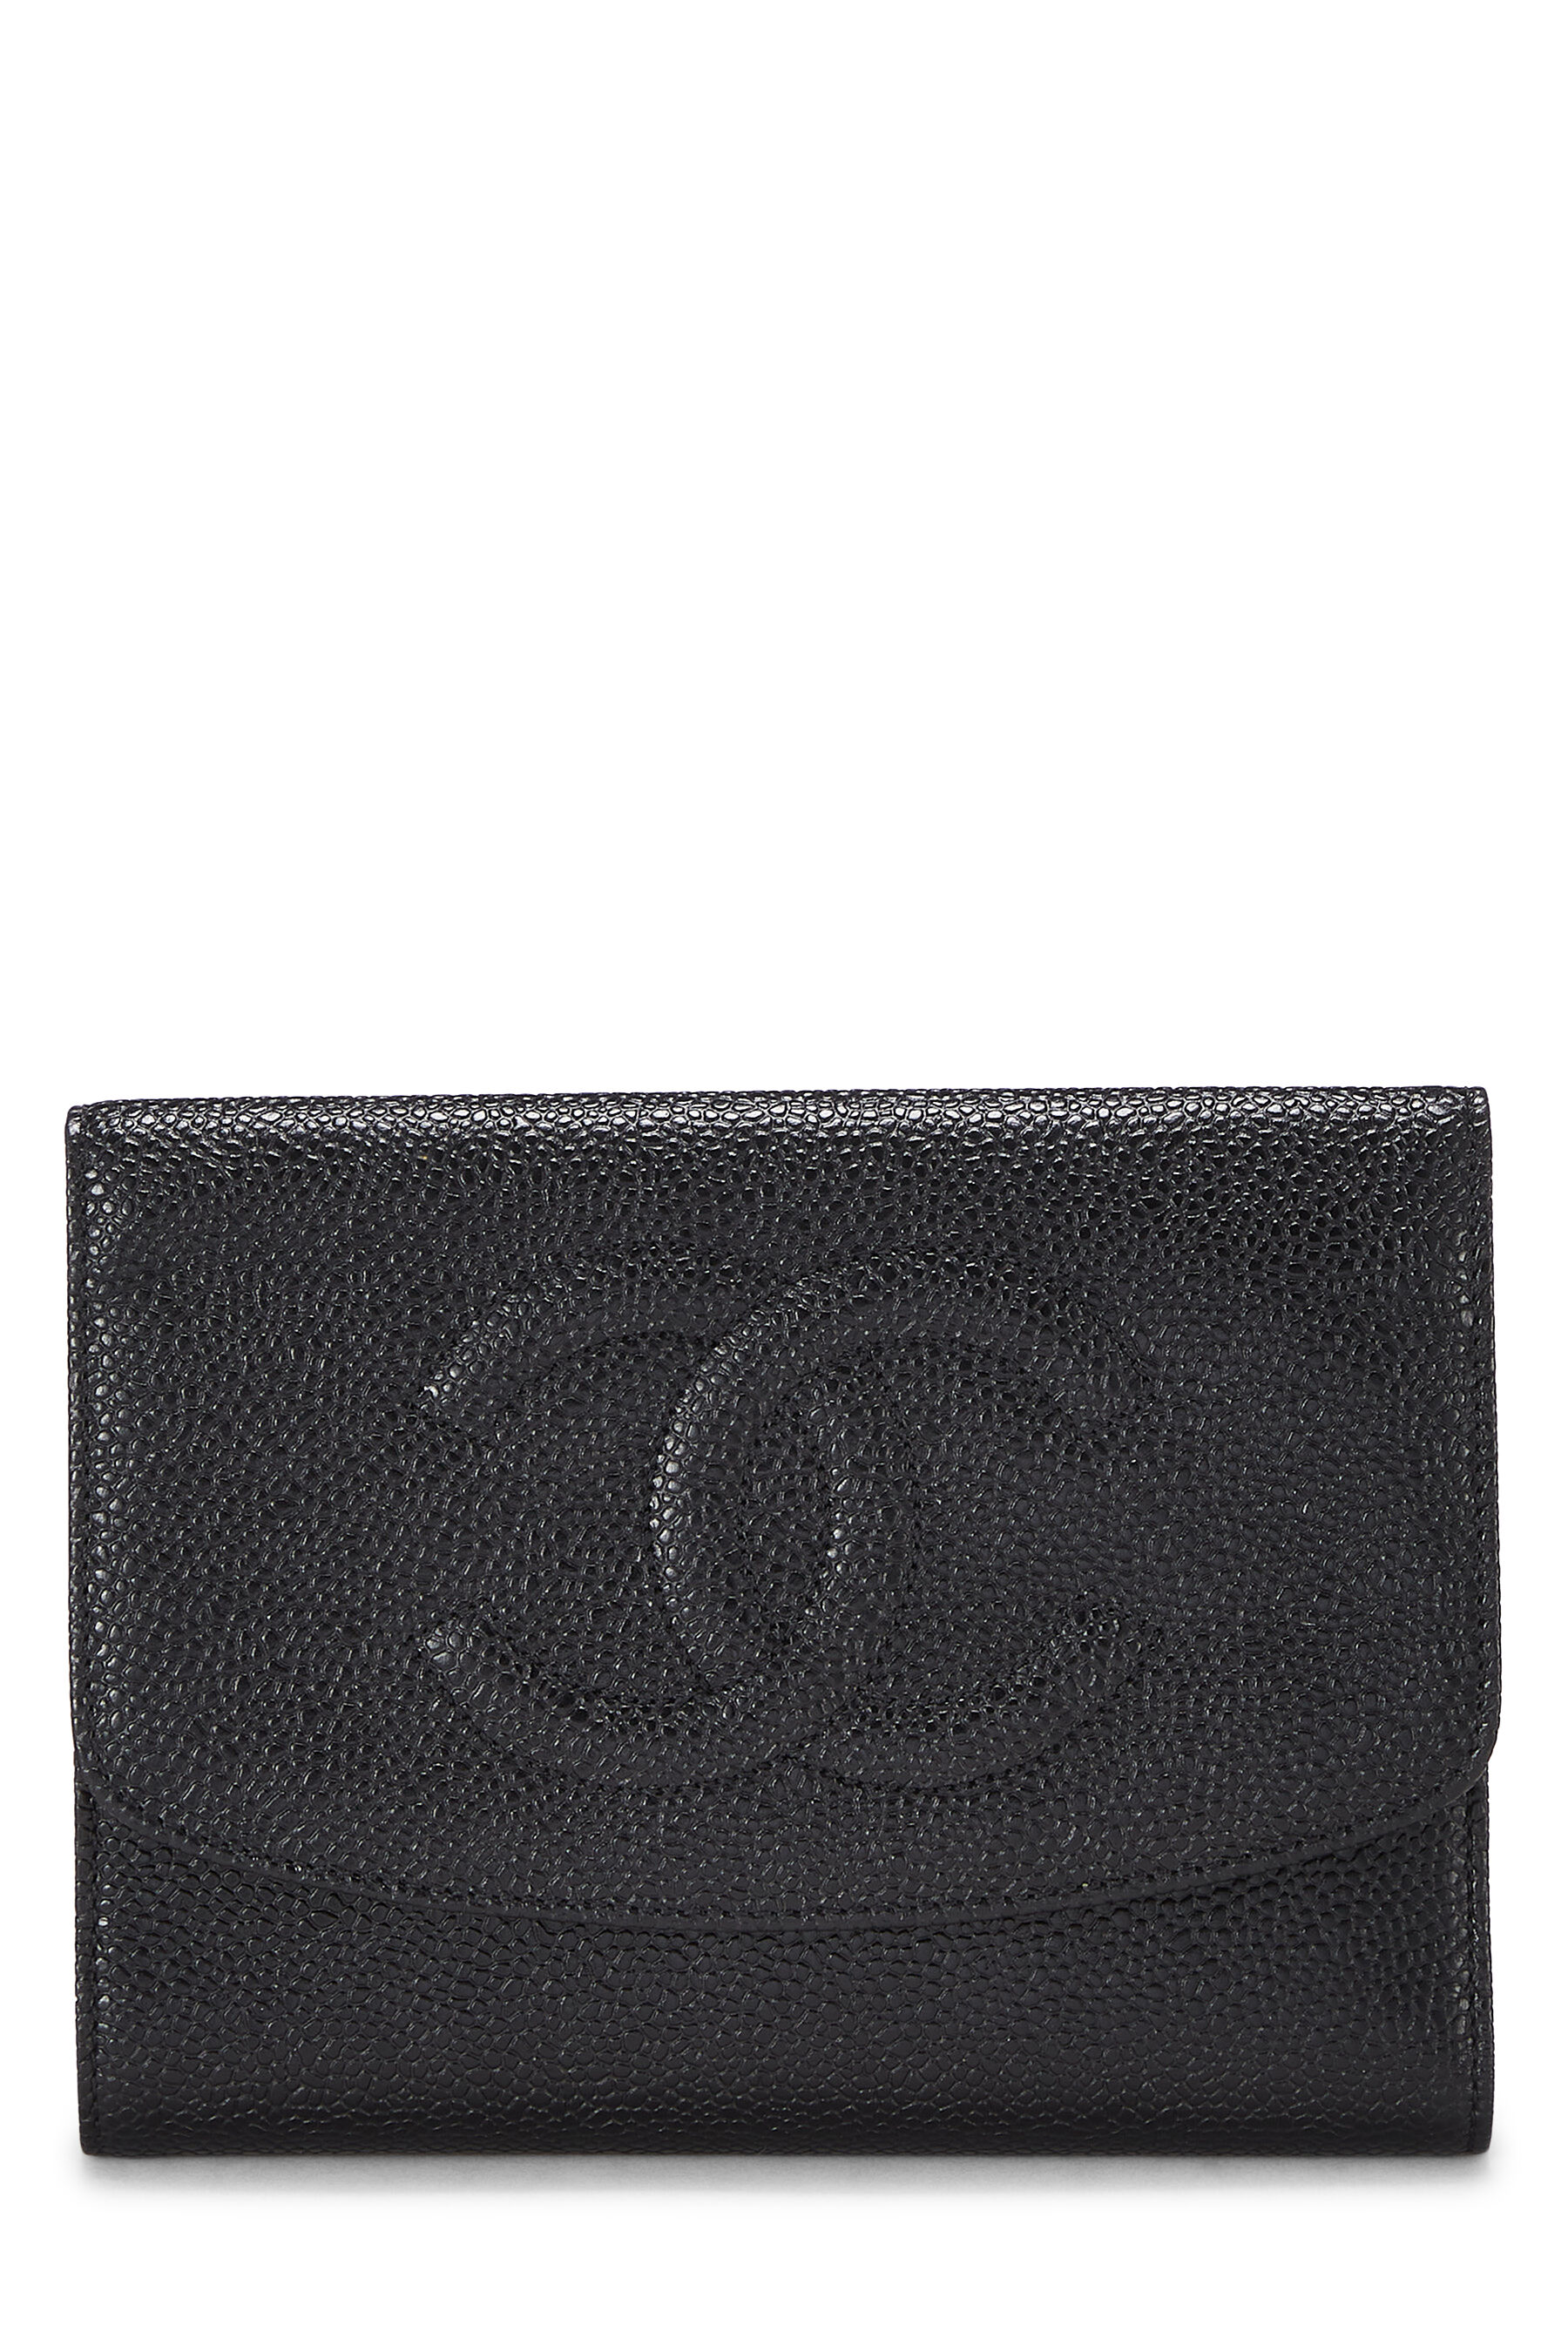 Chanel Black Caviar Timeless 'CC' Compact Wallet Q6A2FV0FKB046